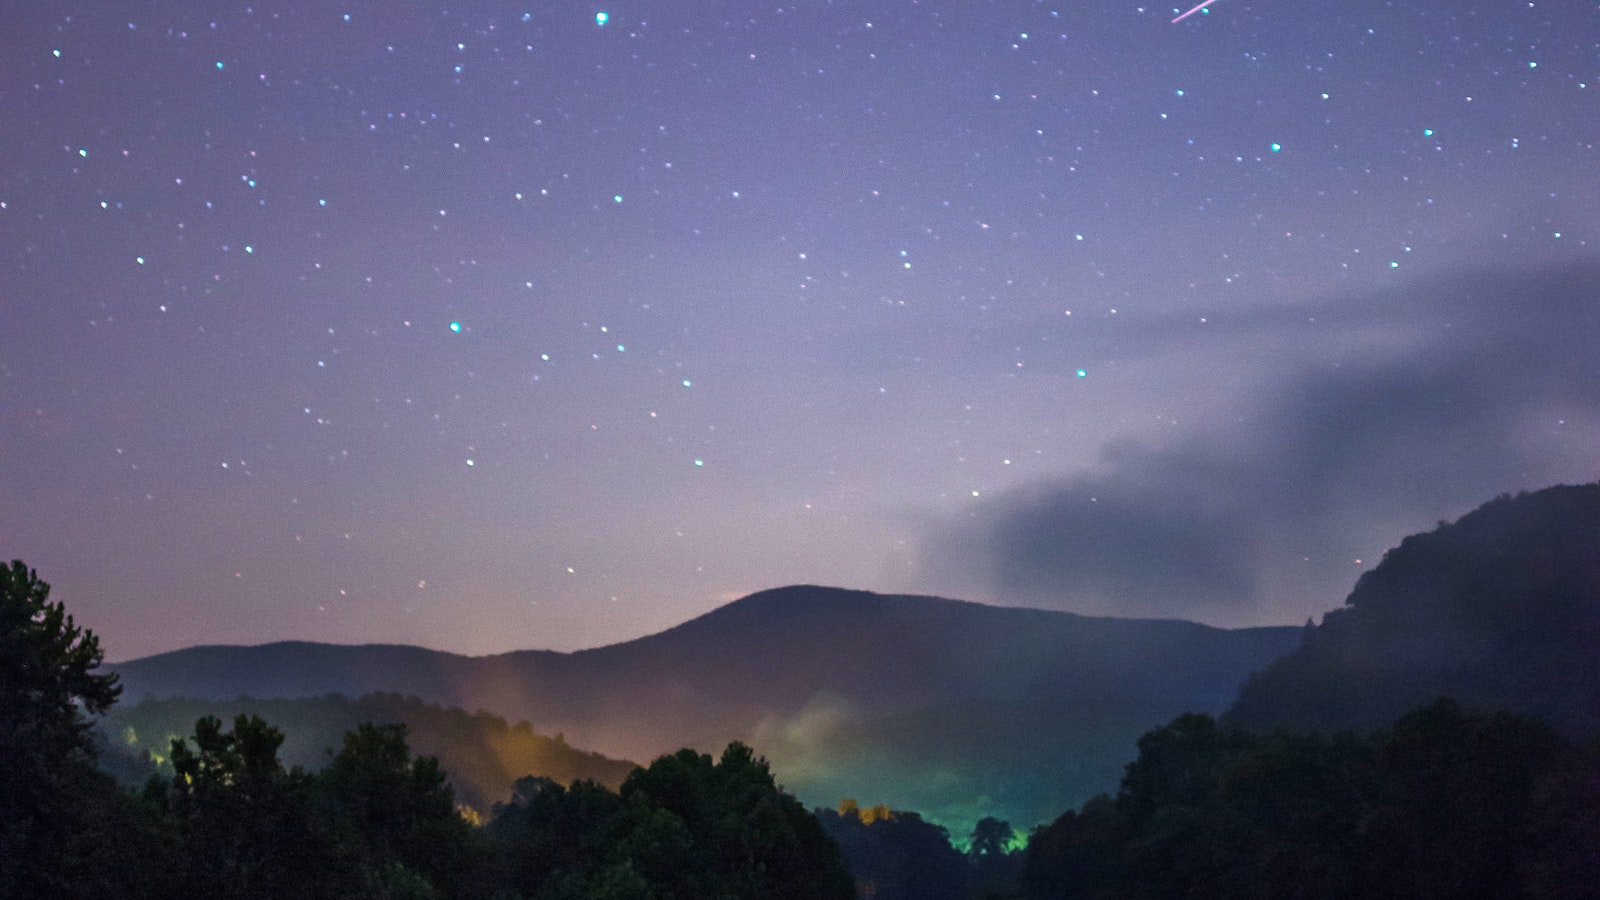 At night, stars above a mountain range